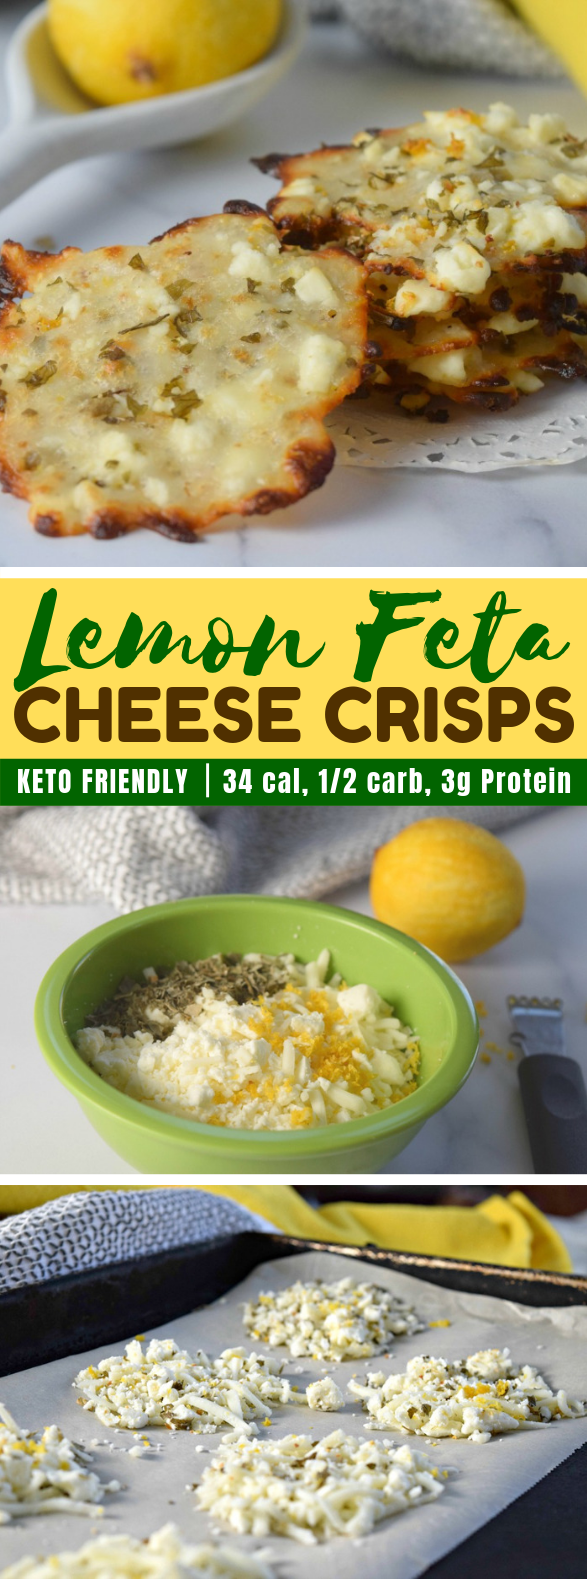 Lemon Feta Cheese Crisps | Keto Low Carb Snack #diet #carbfree